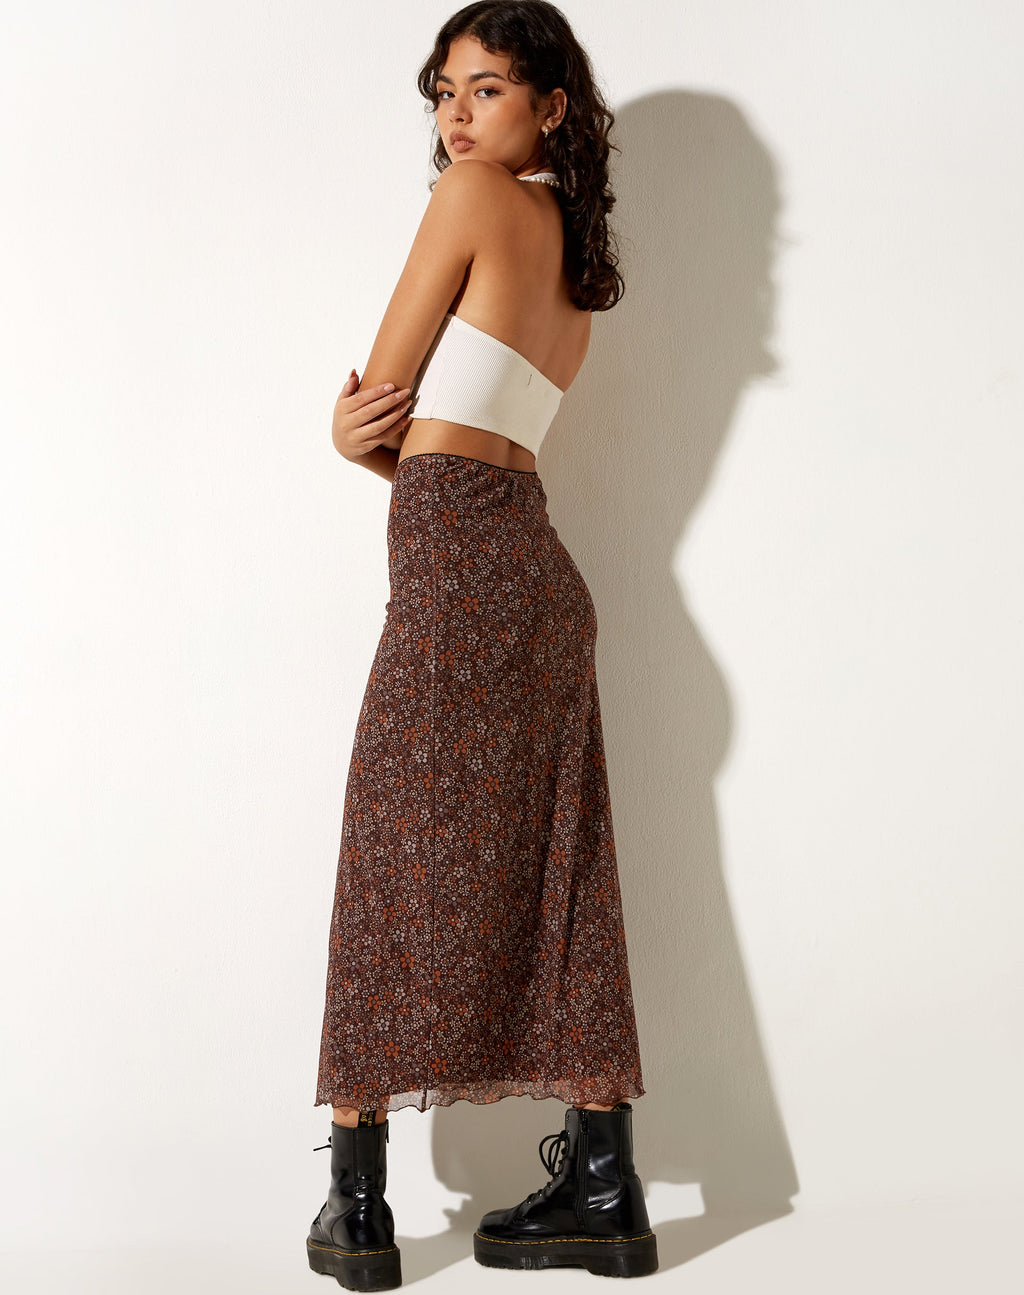 Rindu Midi Skirt in Flower Garden Brown